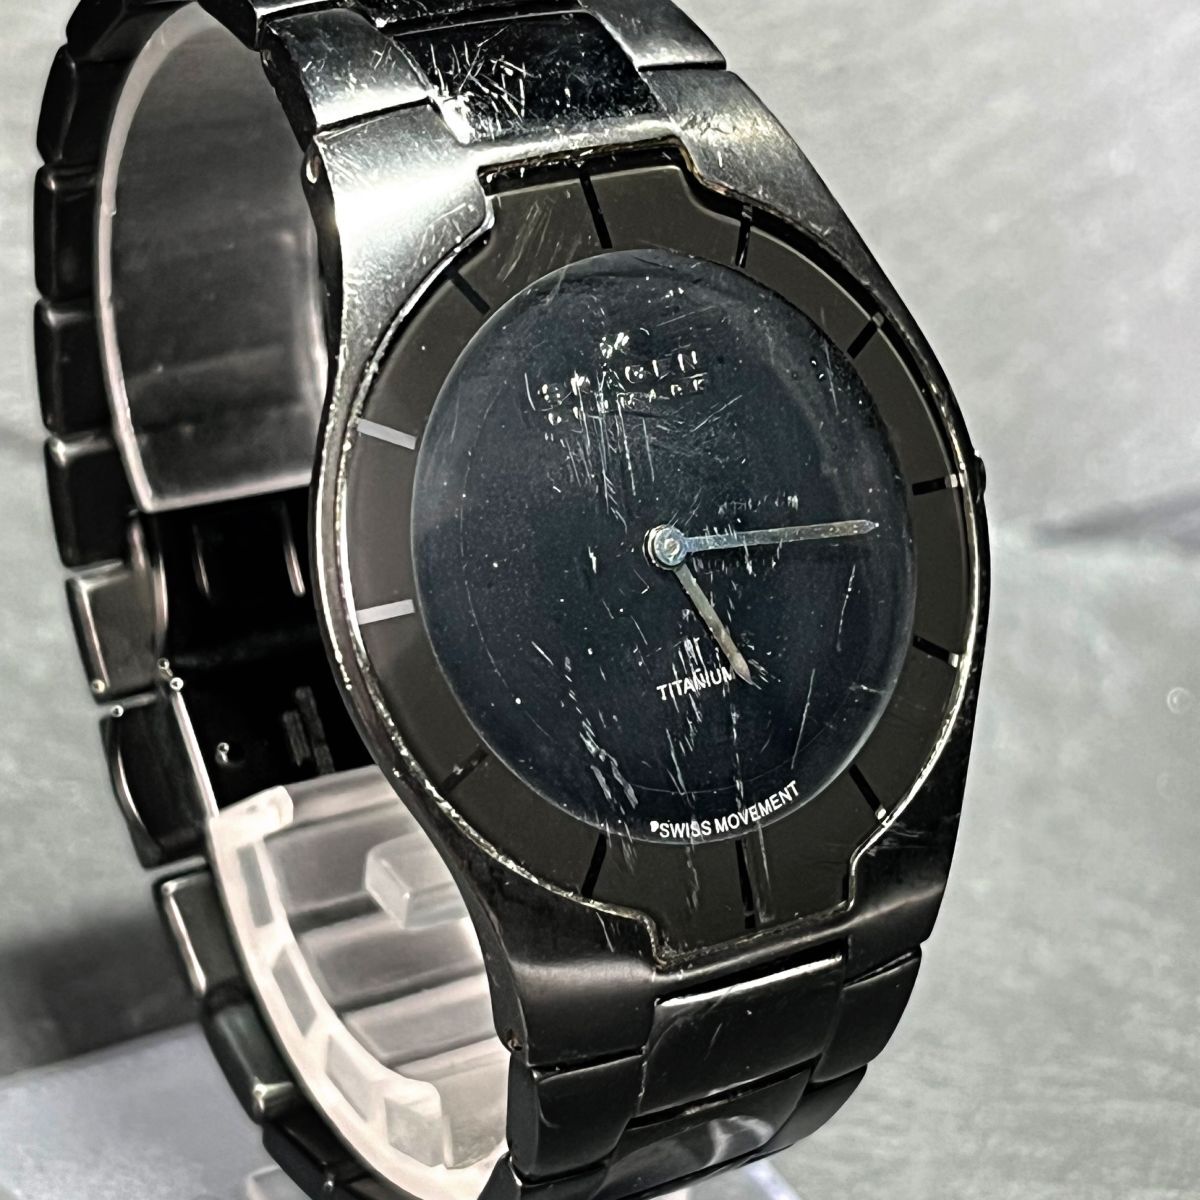 SKAGEN スカーゲン Black Label ブラックレーベル 585XLTMXB 腕時計 アナログ クオーツ ２針 ラウンド チタン メタルベルト 両開き式の画像3